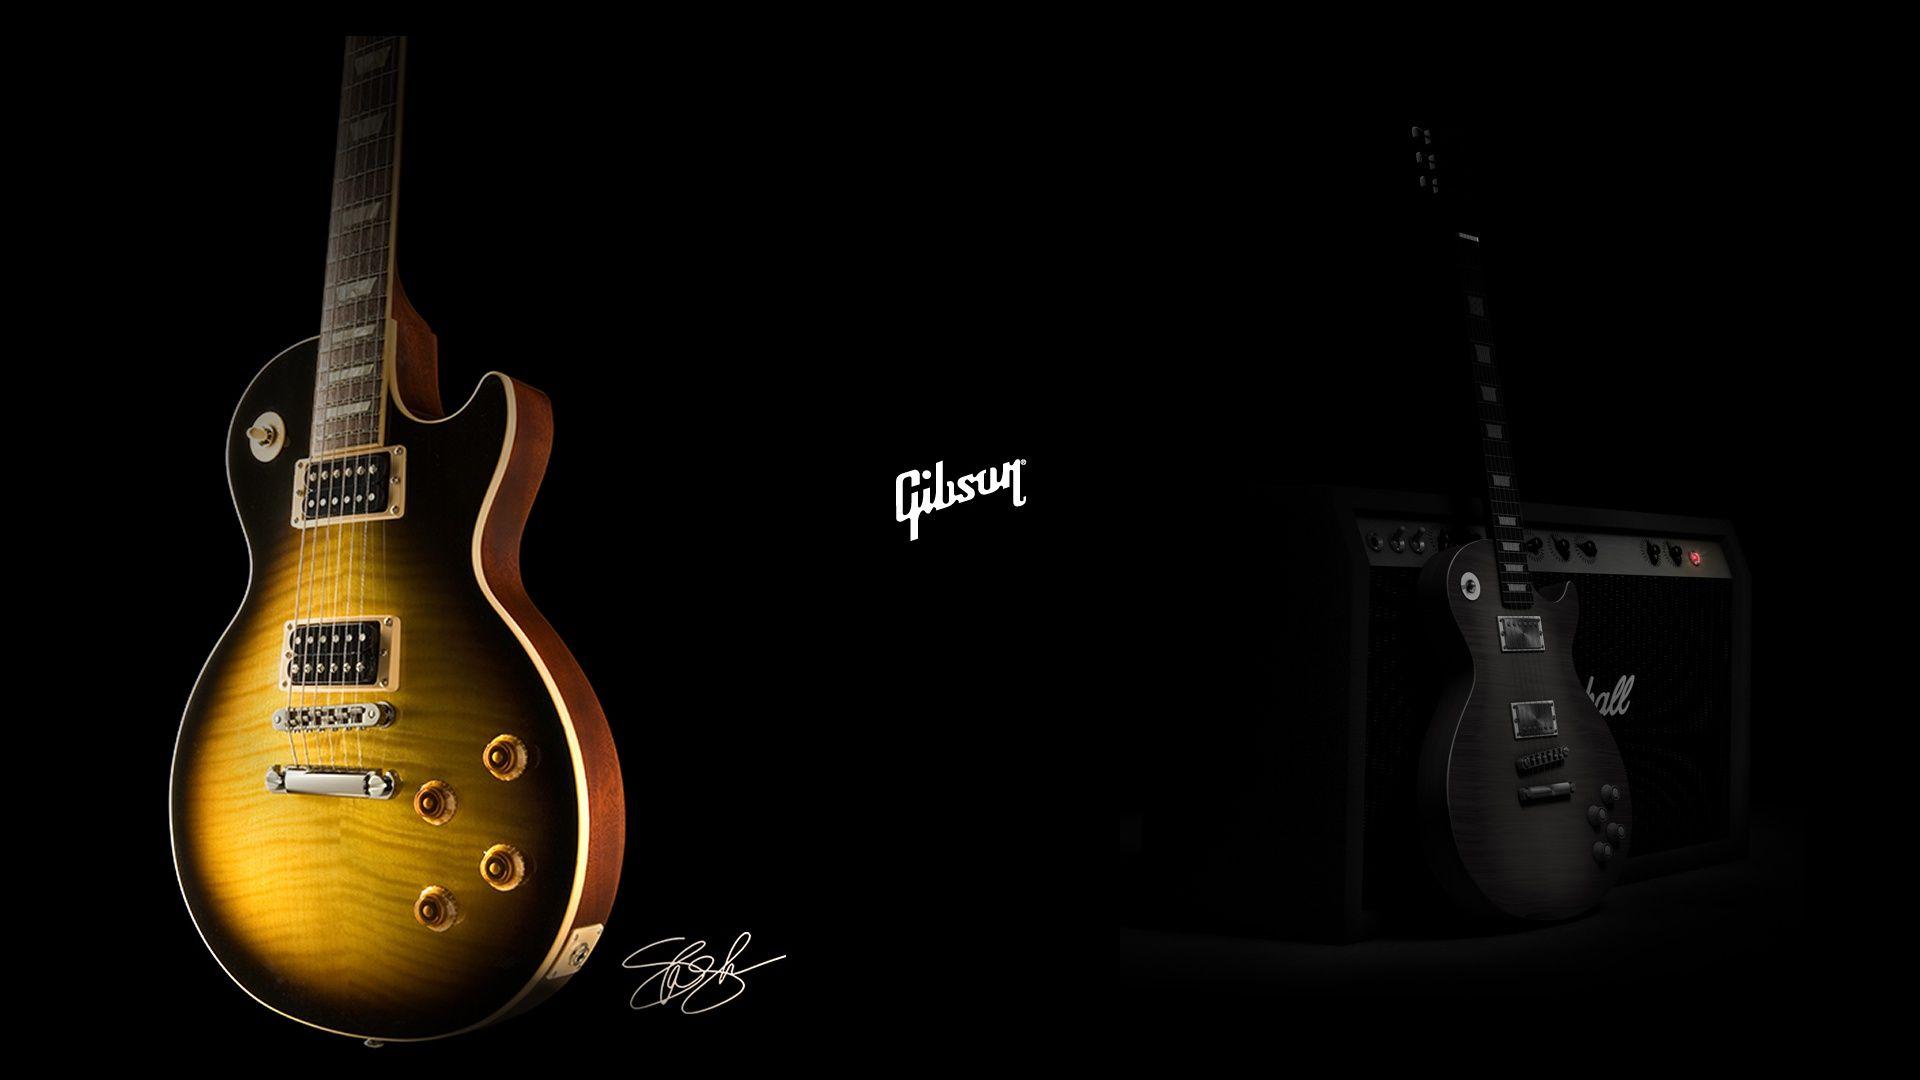 Gibson Les Paul Guitars Wallpapers Wallpaper Cave